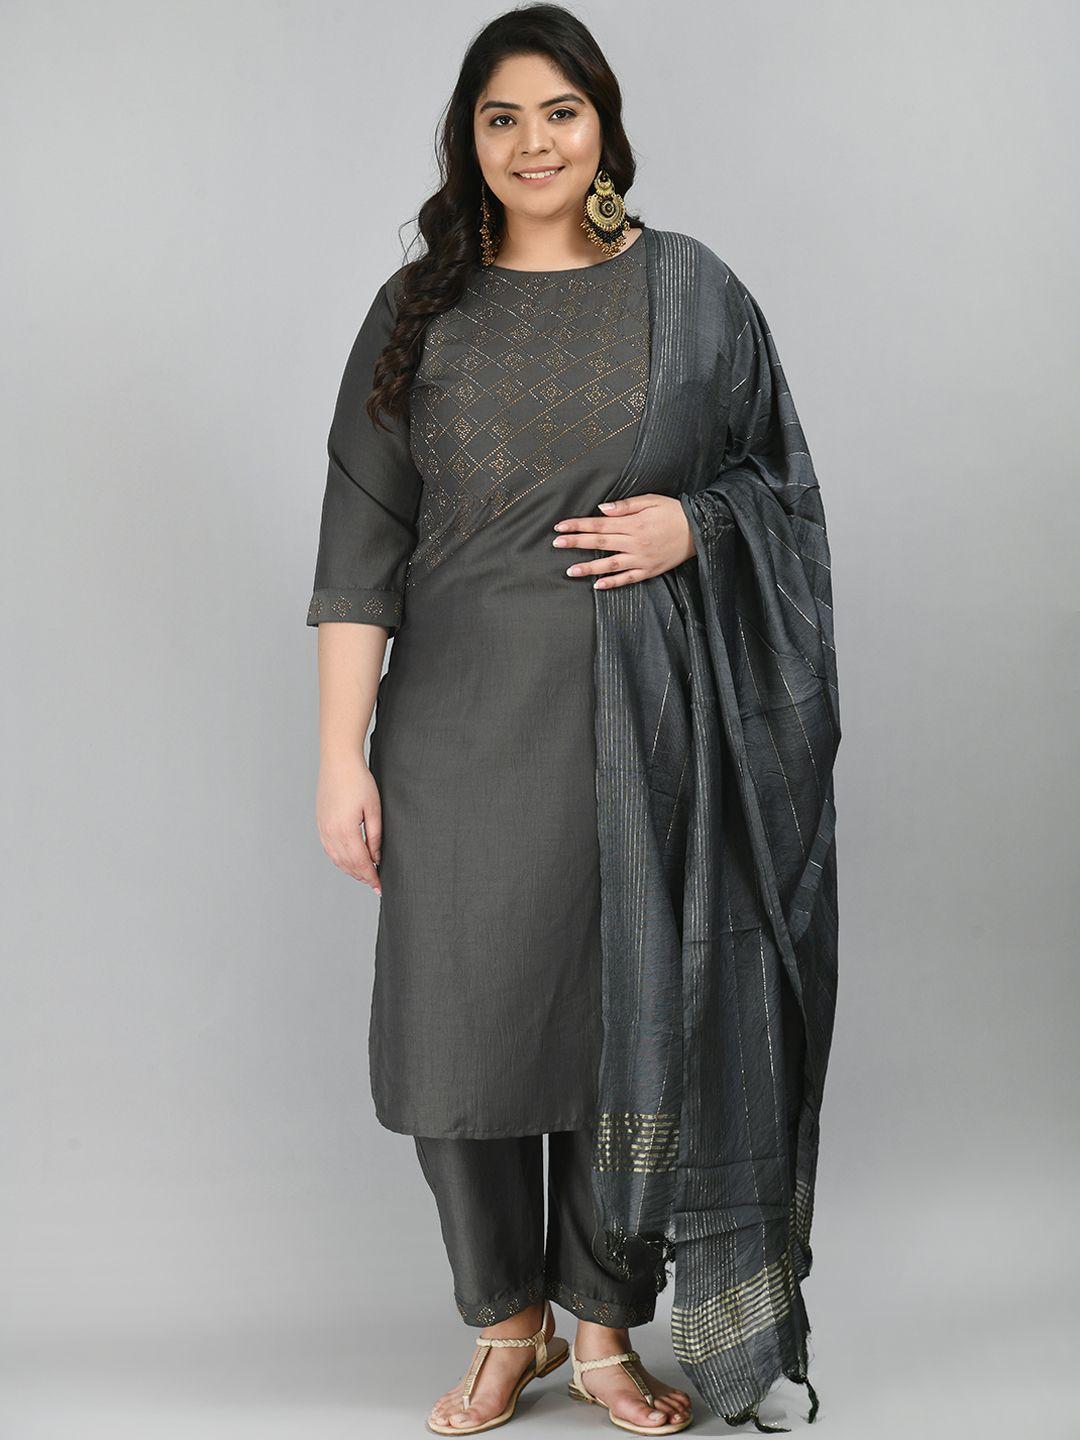 prettyplus by desinoor.com women grey beads and stones kurti with trousers & dupatta